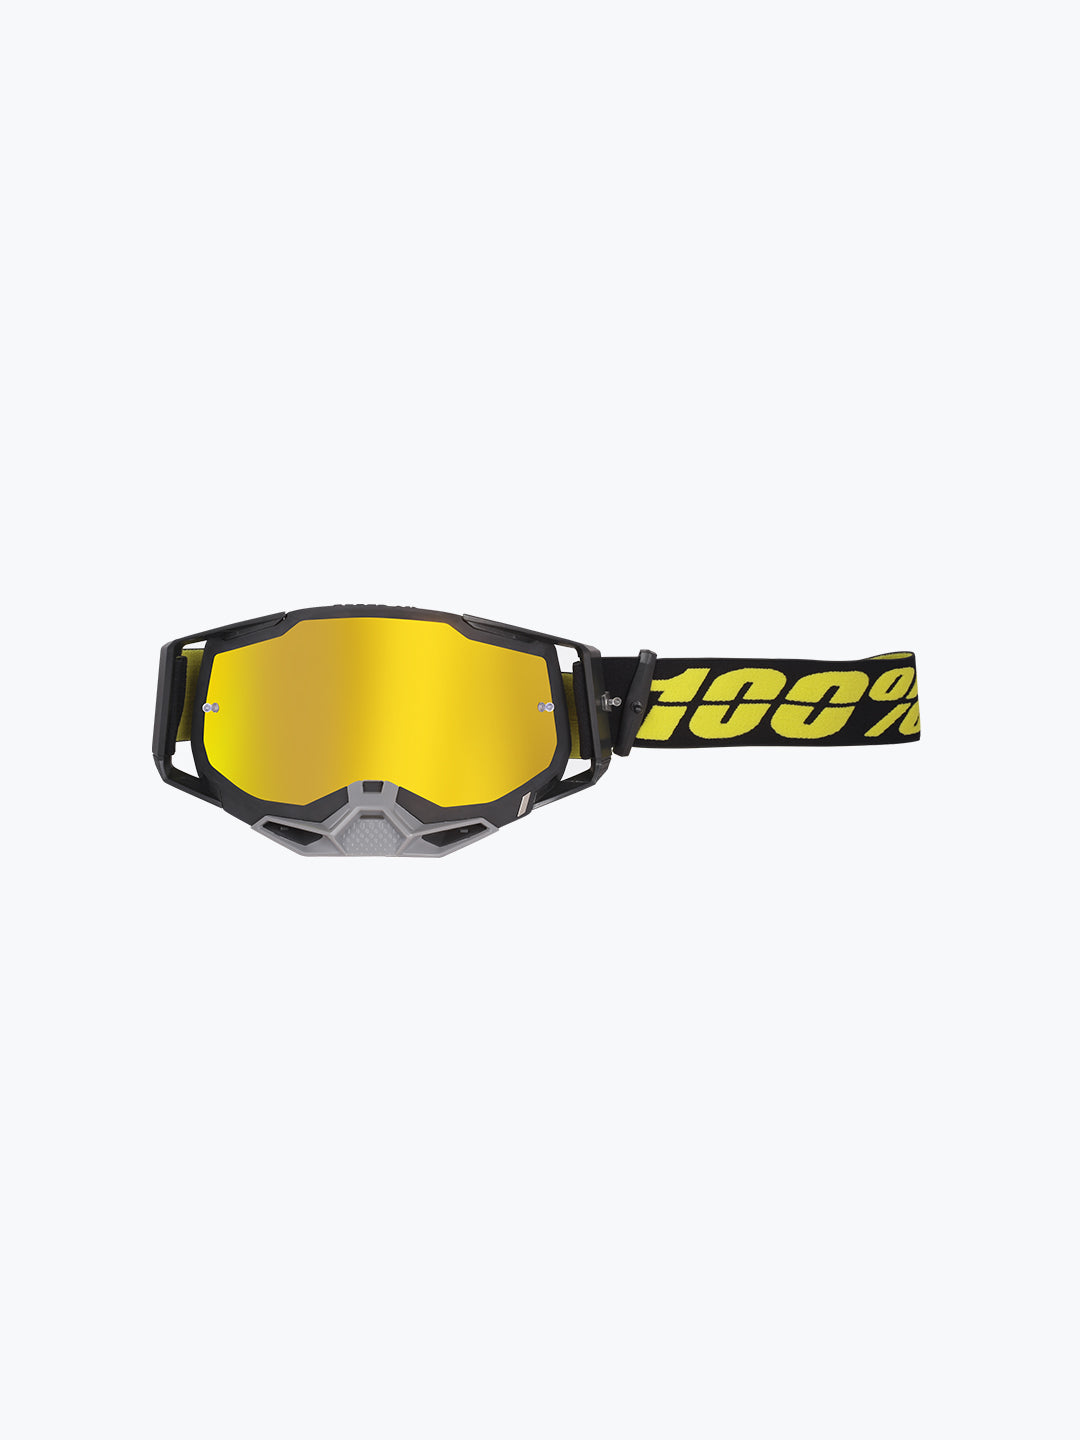 Goggles 100% -212 Black Gold Tint